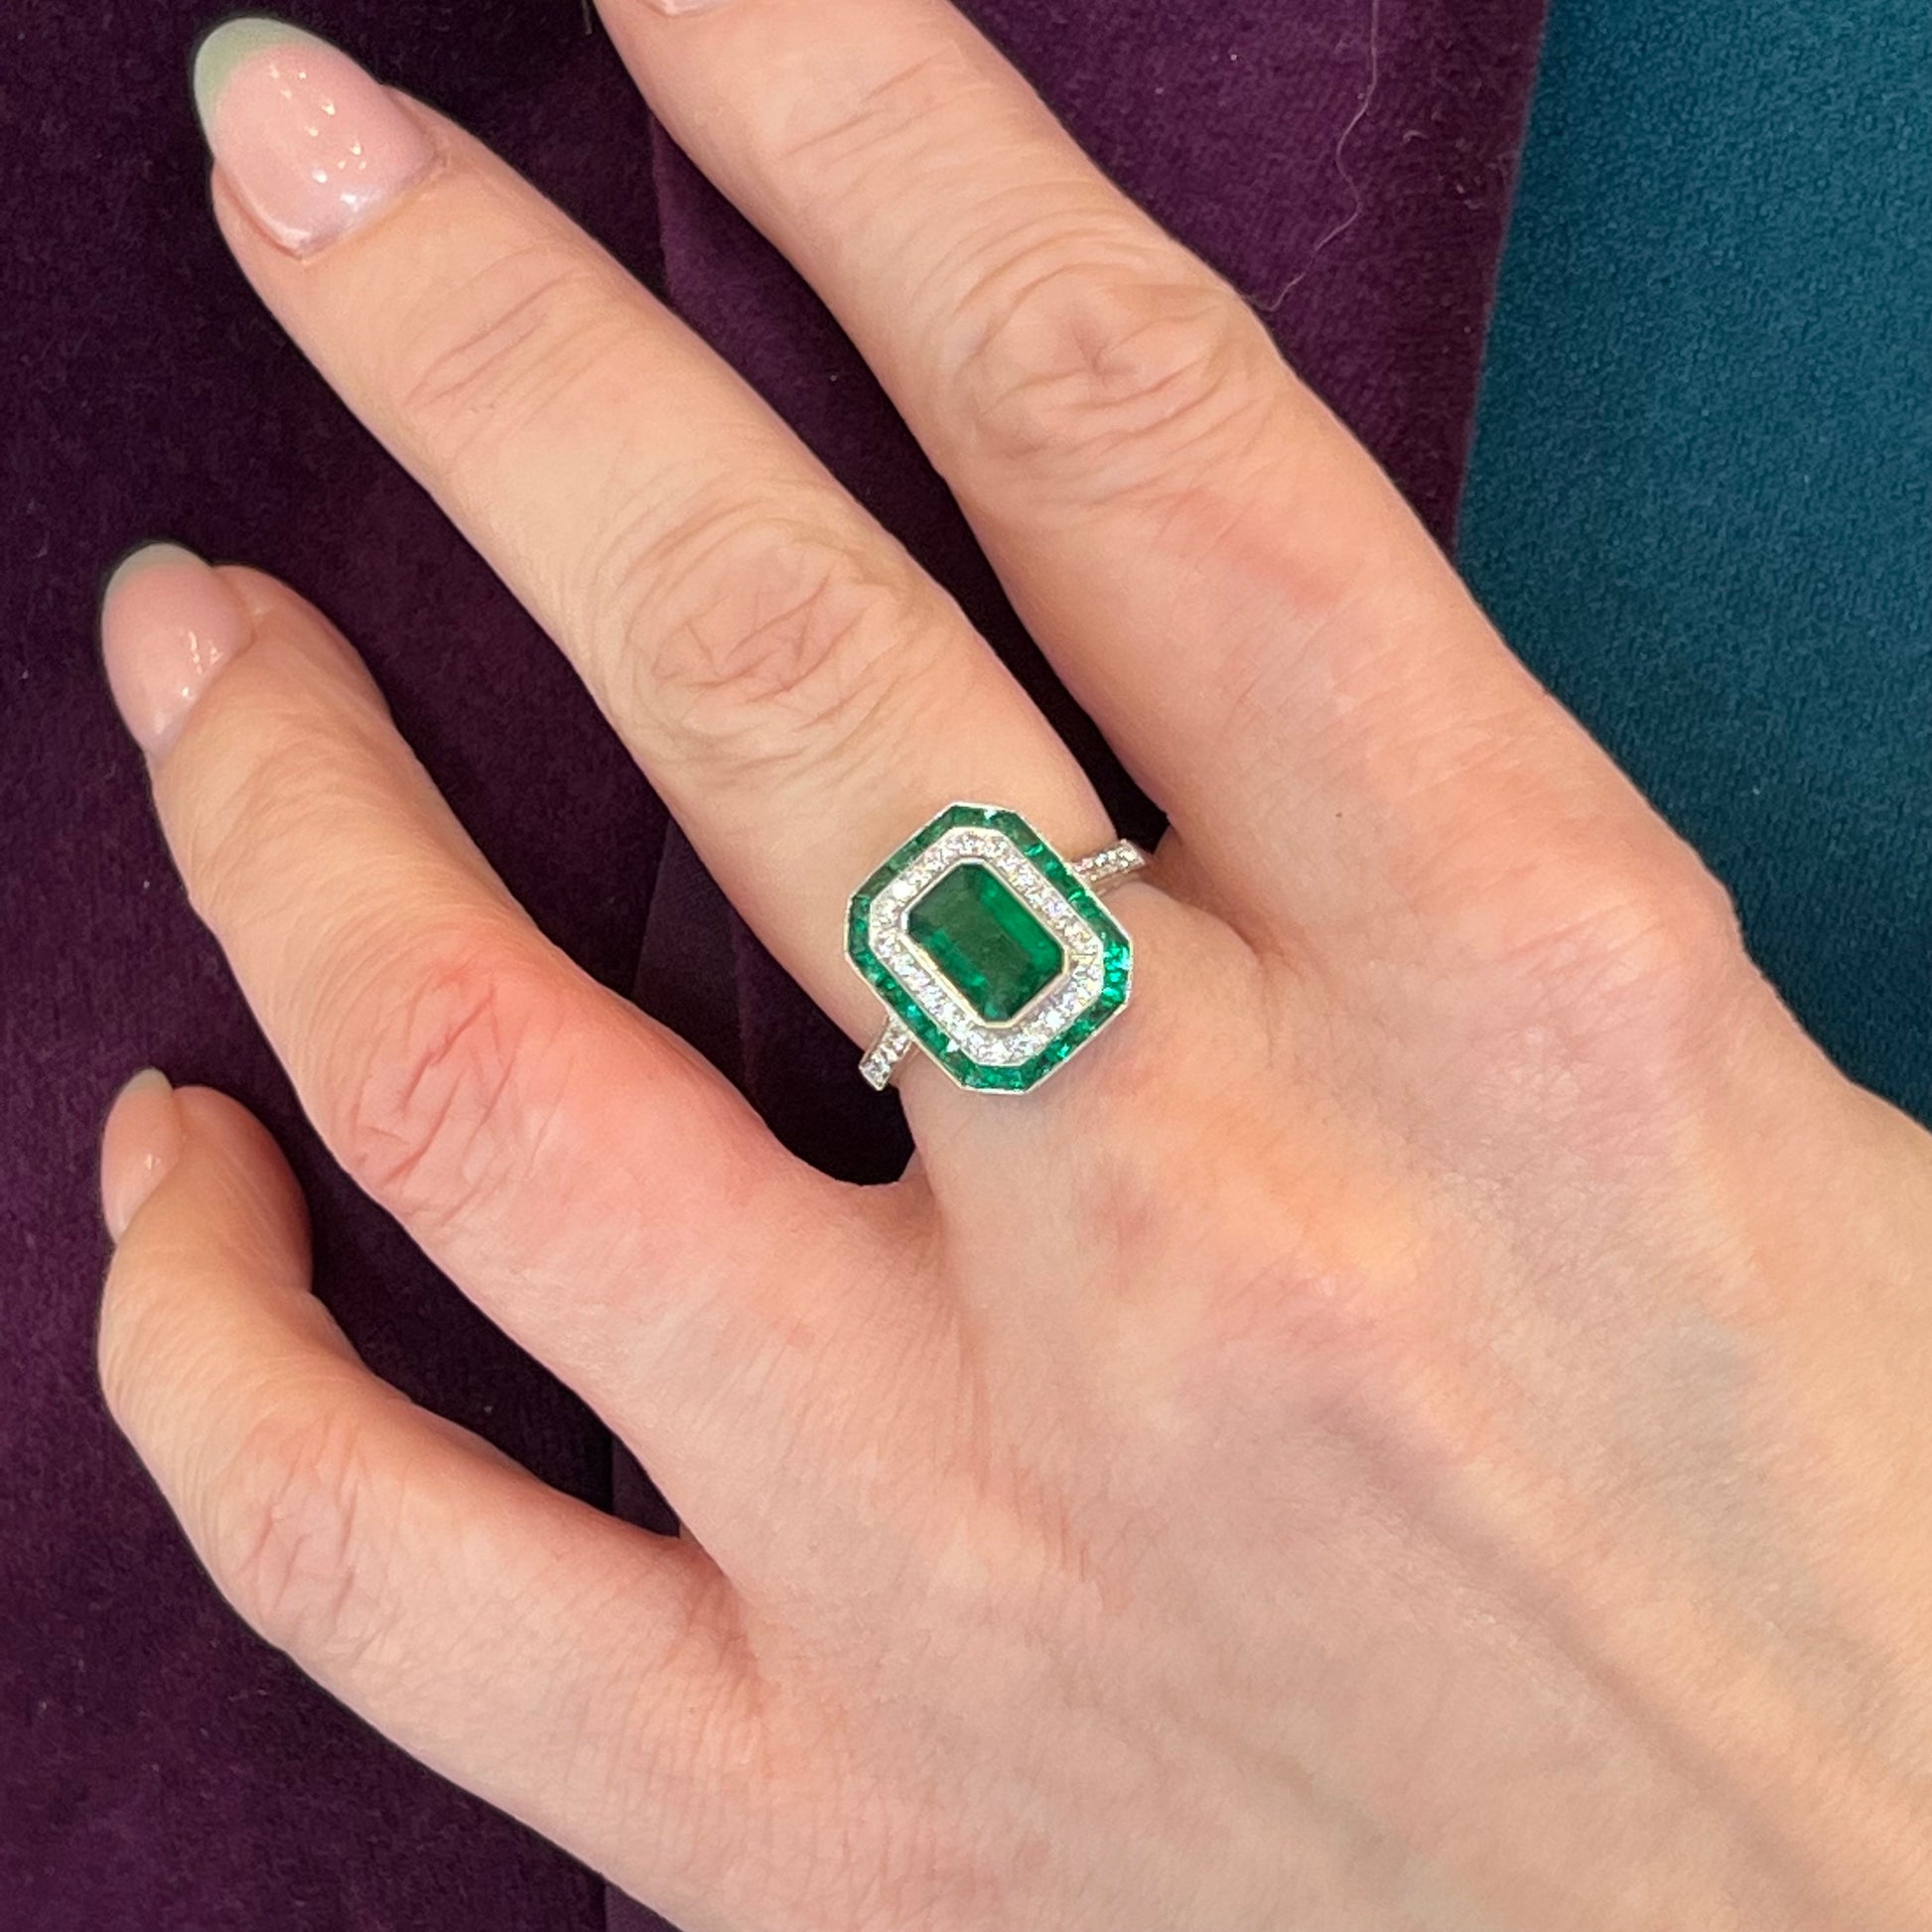 Bezel Set Emerald & Diamond Halo Cocktail Ring in Platinum